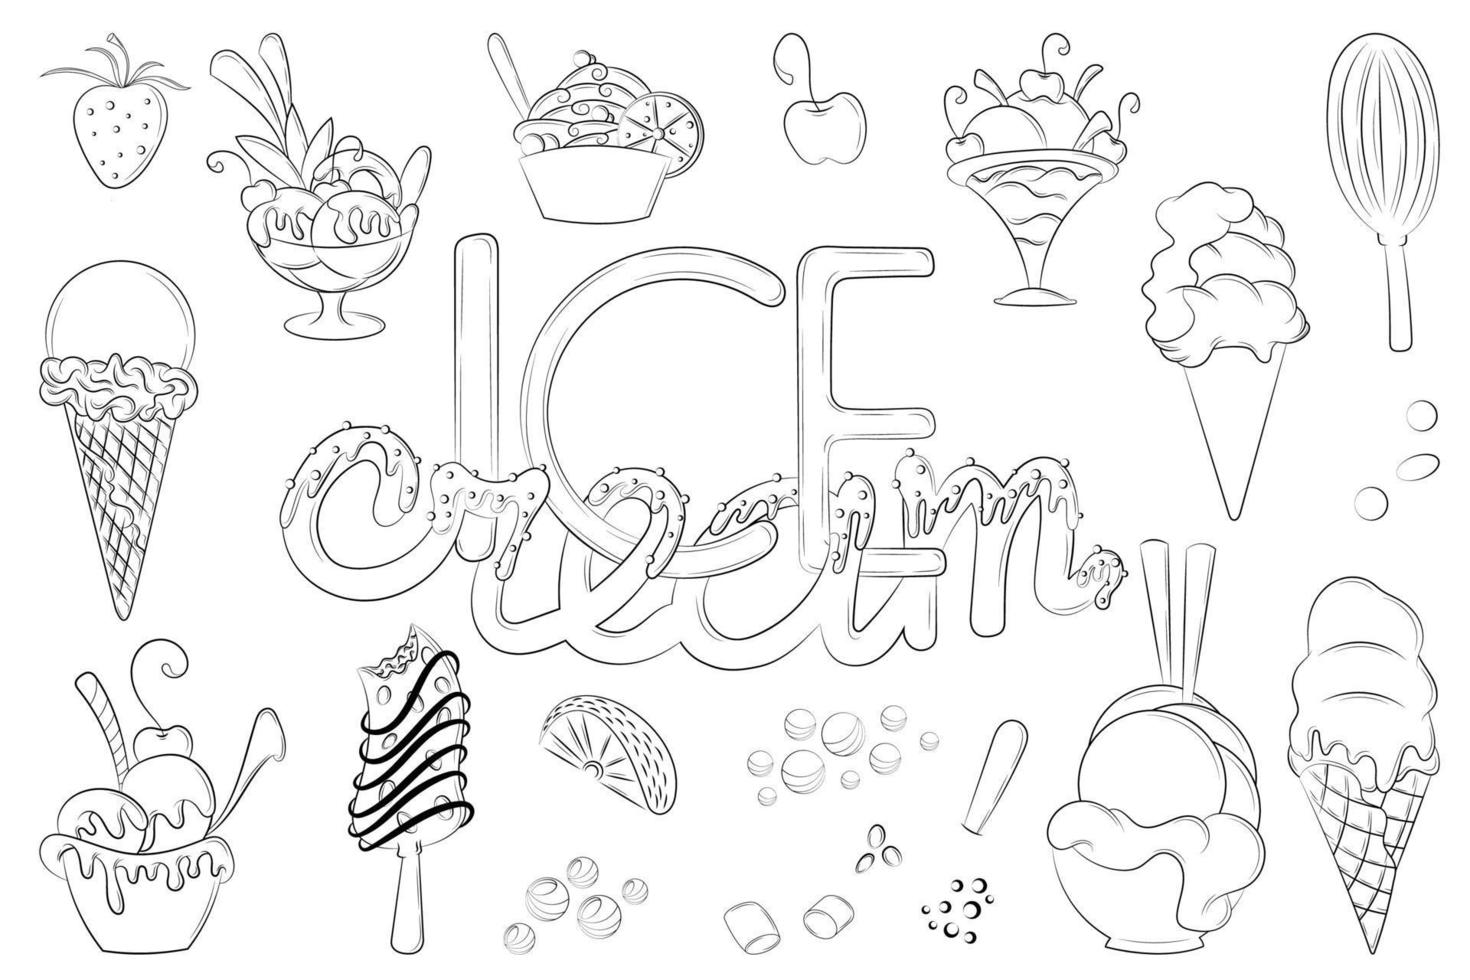 Ice cream doodle set. Isolated on white background. vector